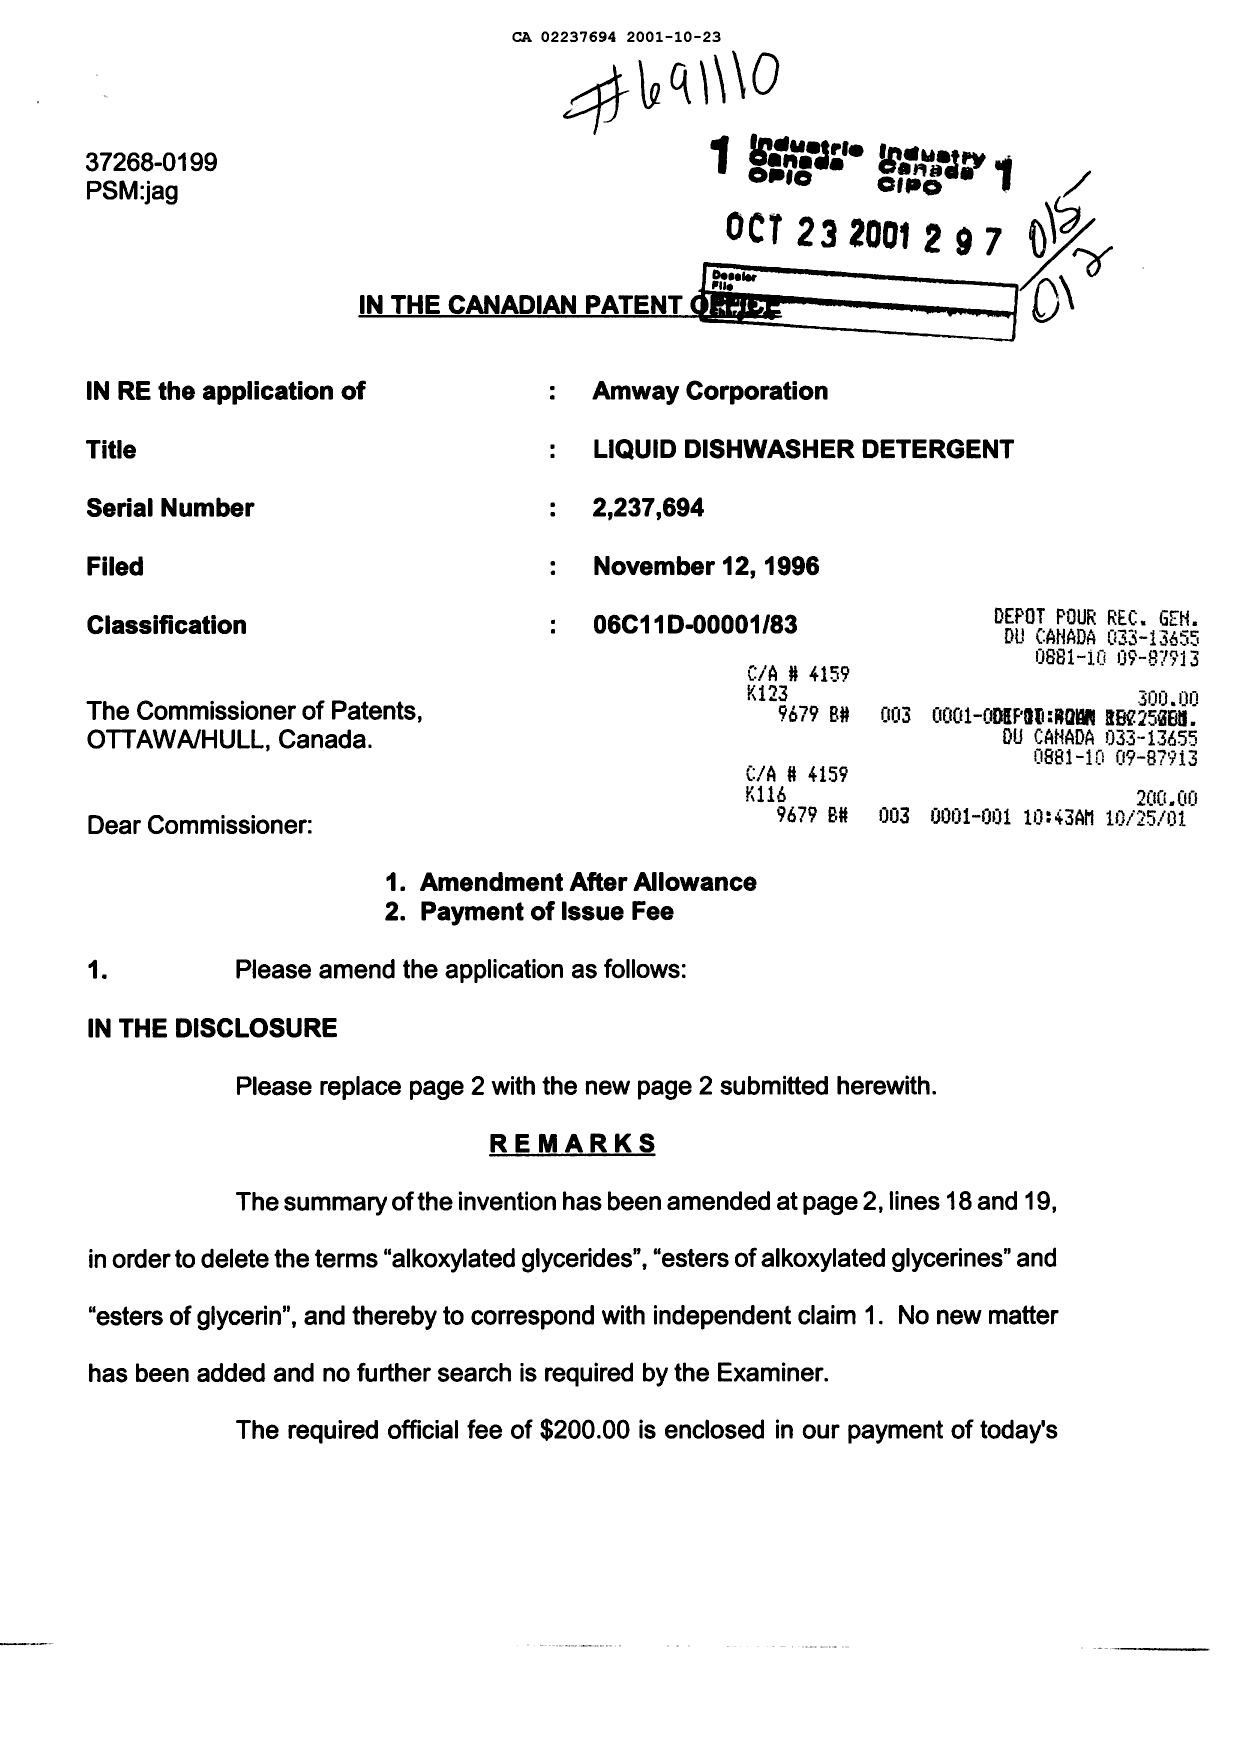 Canadian Patent Document 2237694. Correspondence 20011023. Image 1 of 2